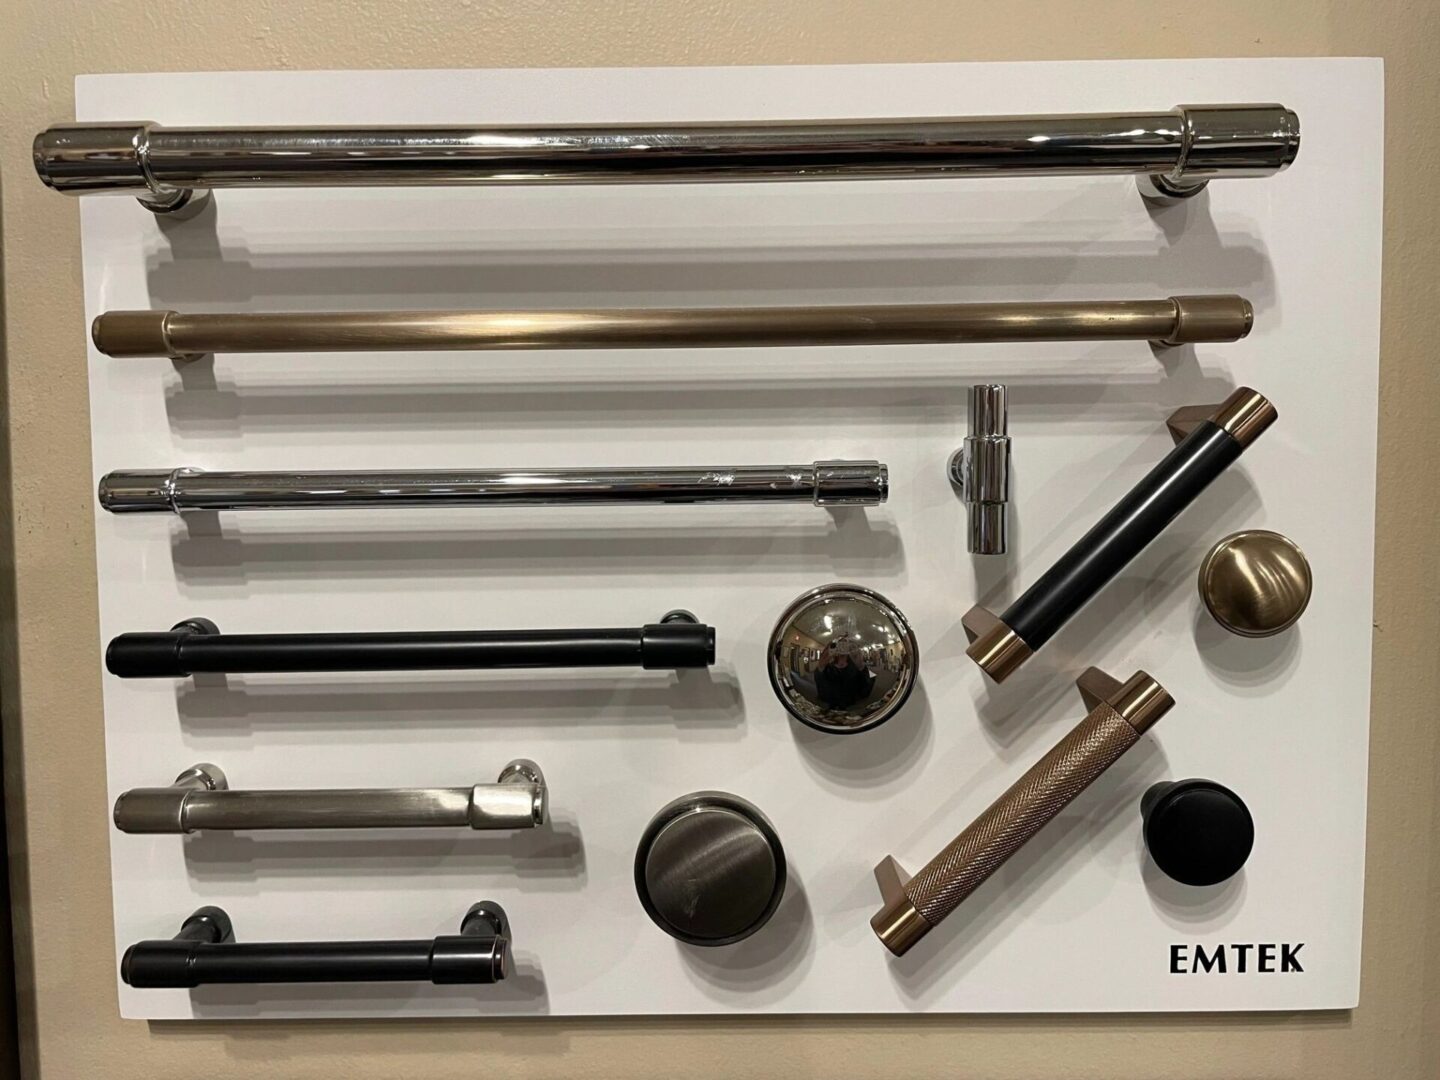 Variety of Handles from EMTEK Brand